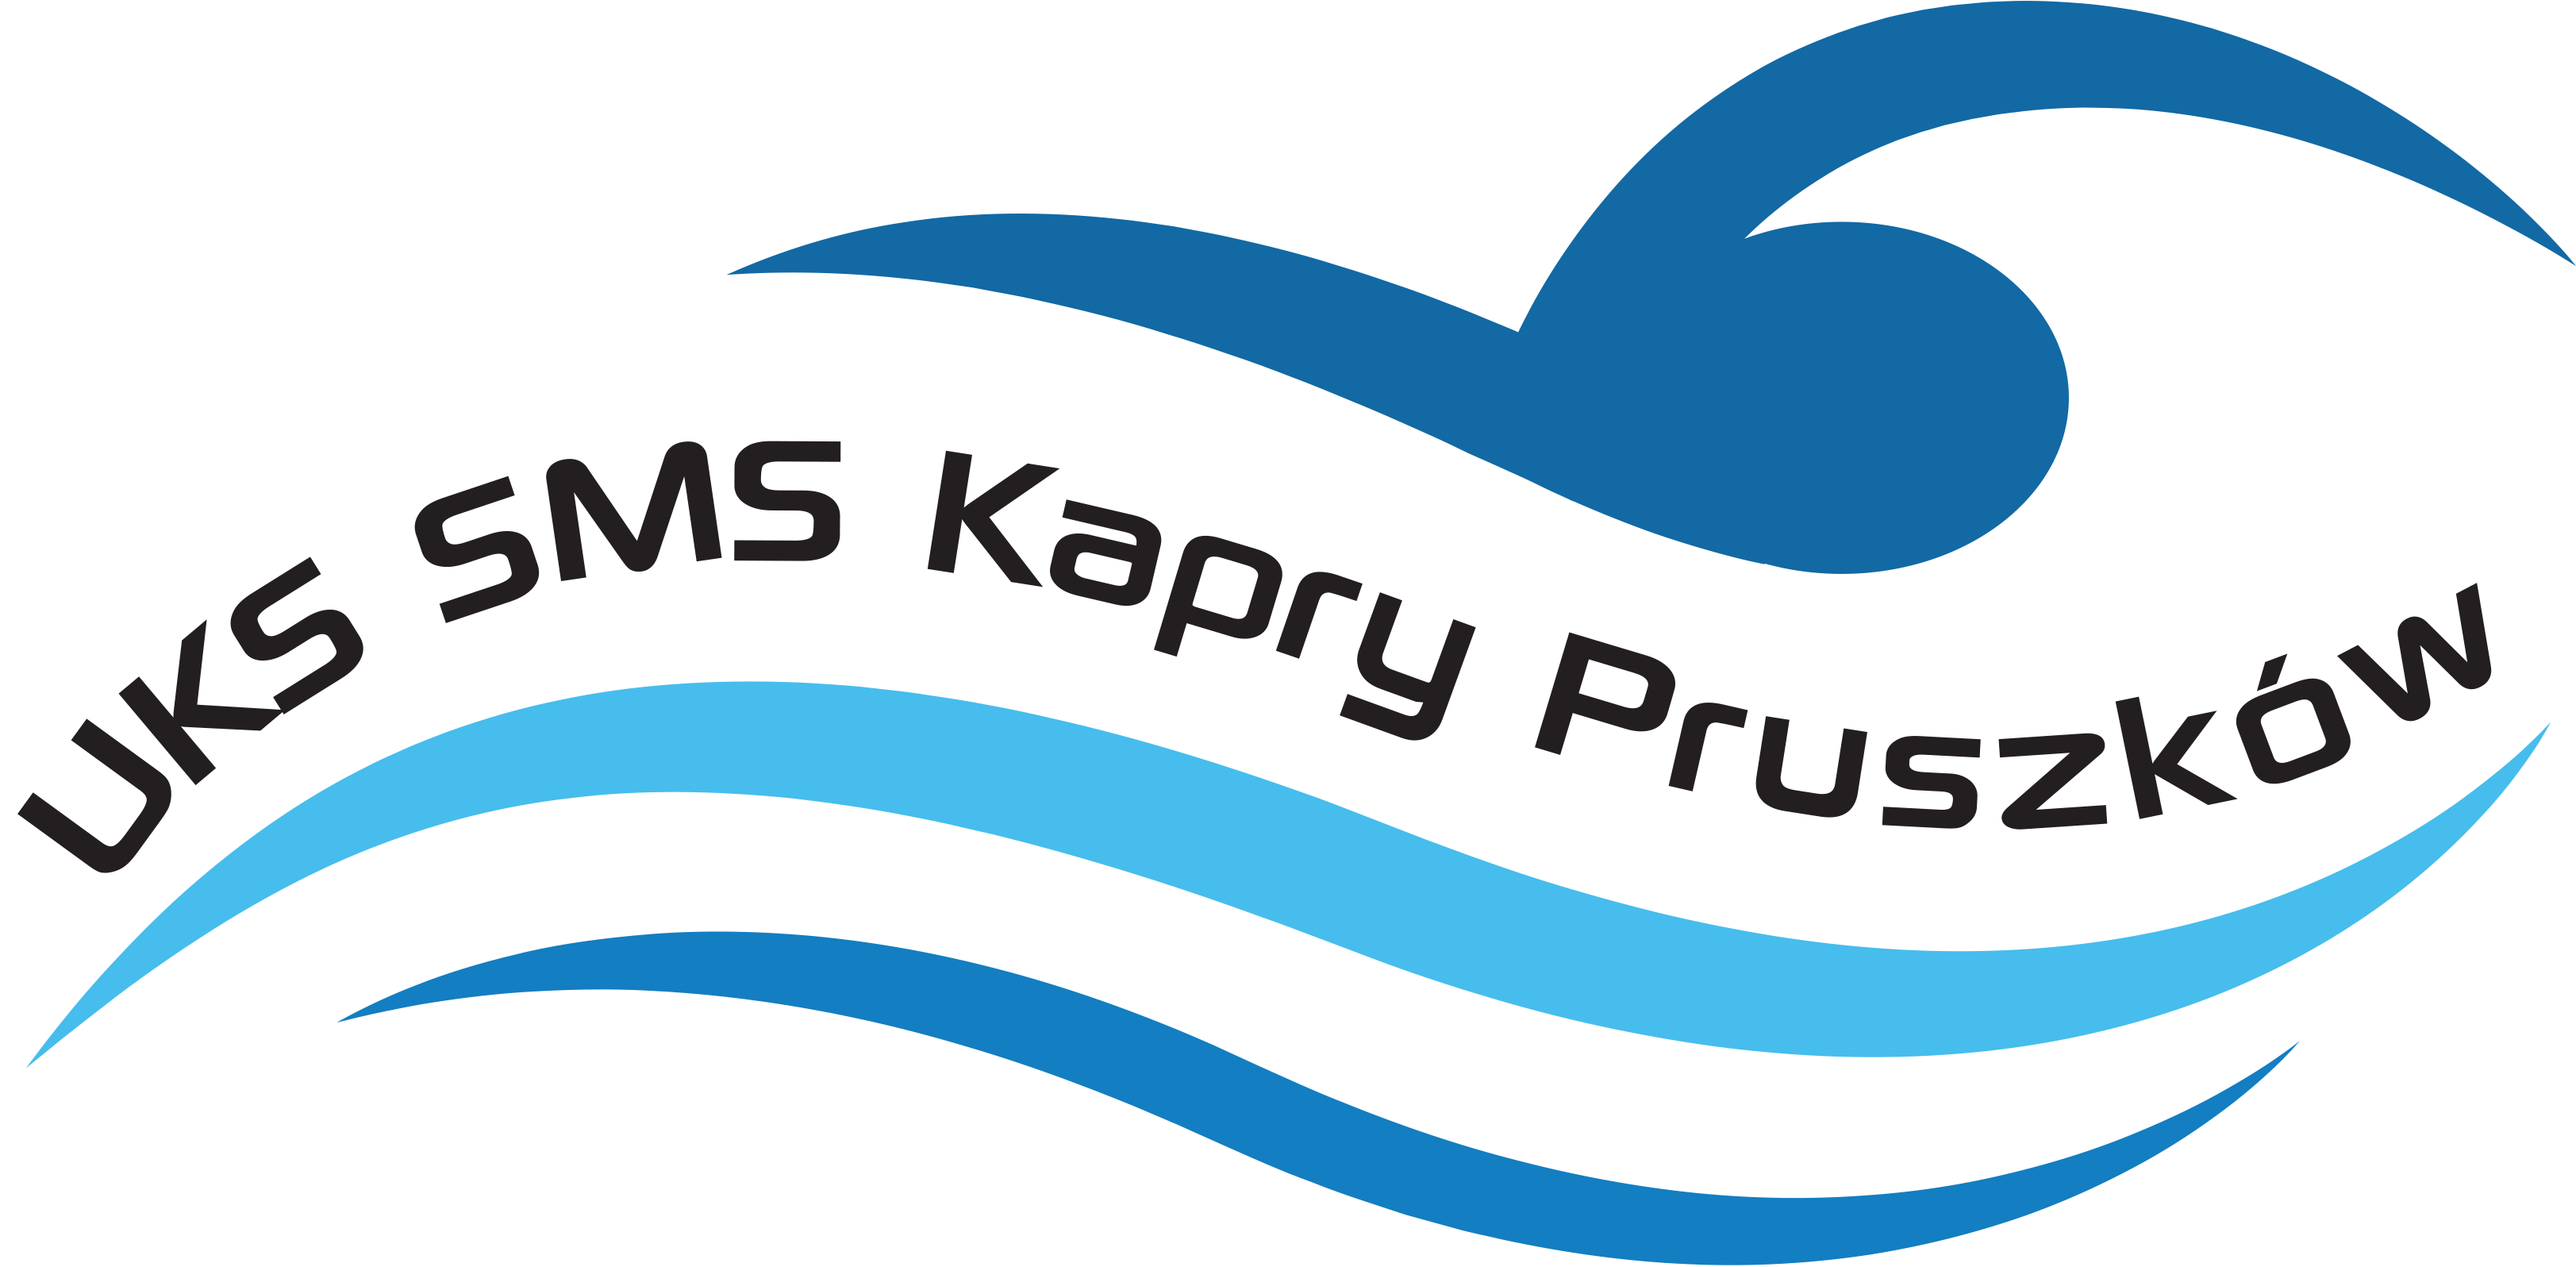 UKS Kapry logo swim 1 1